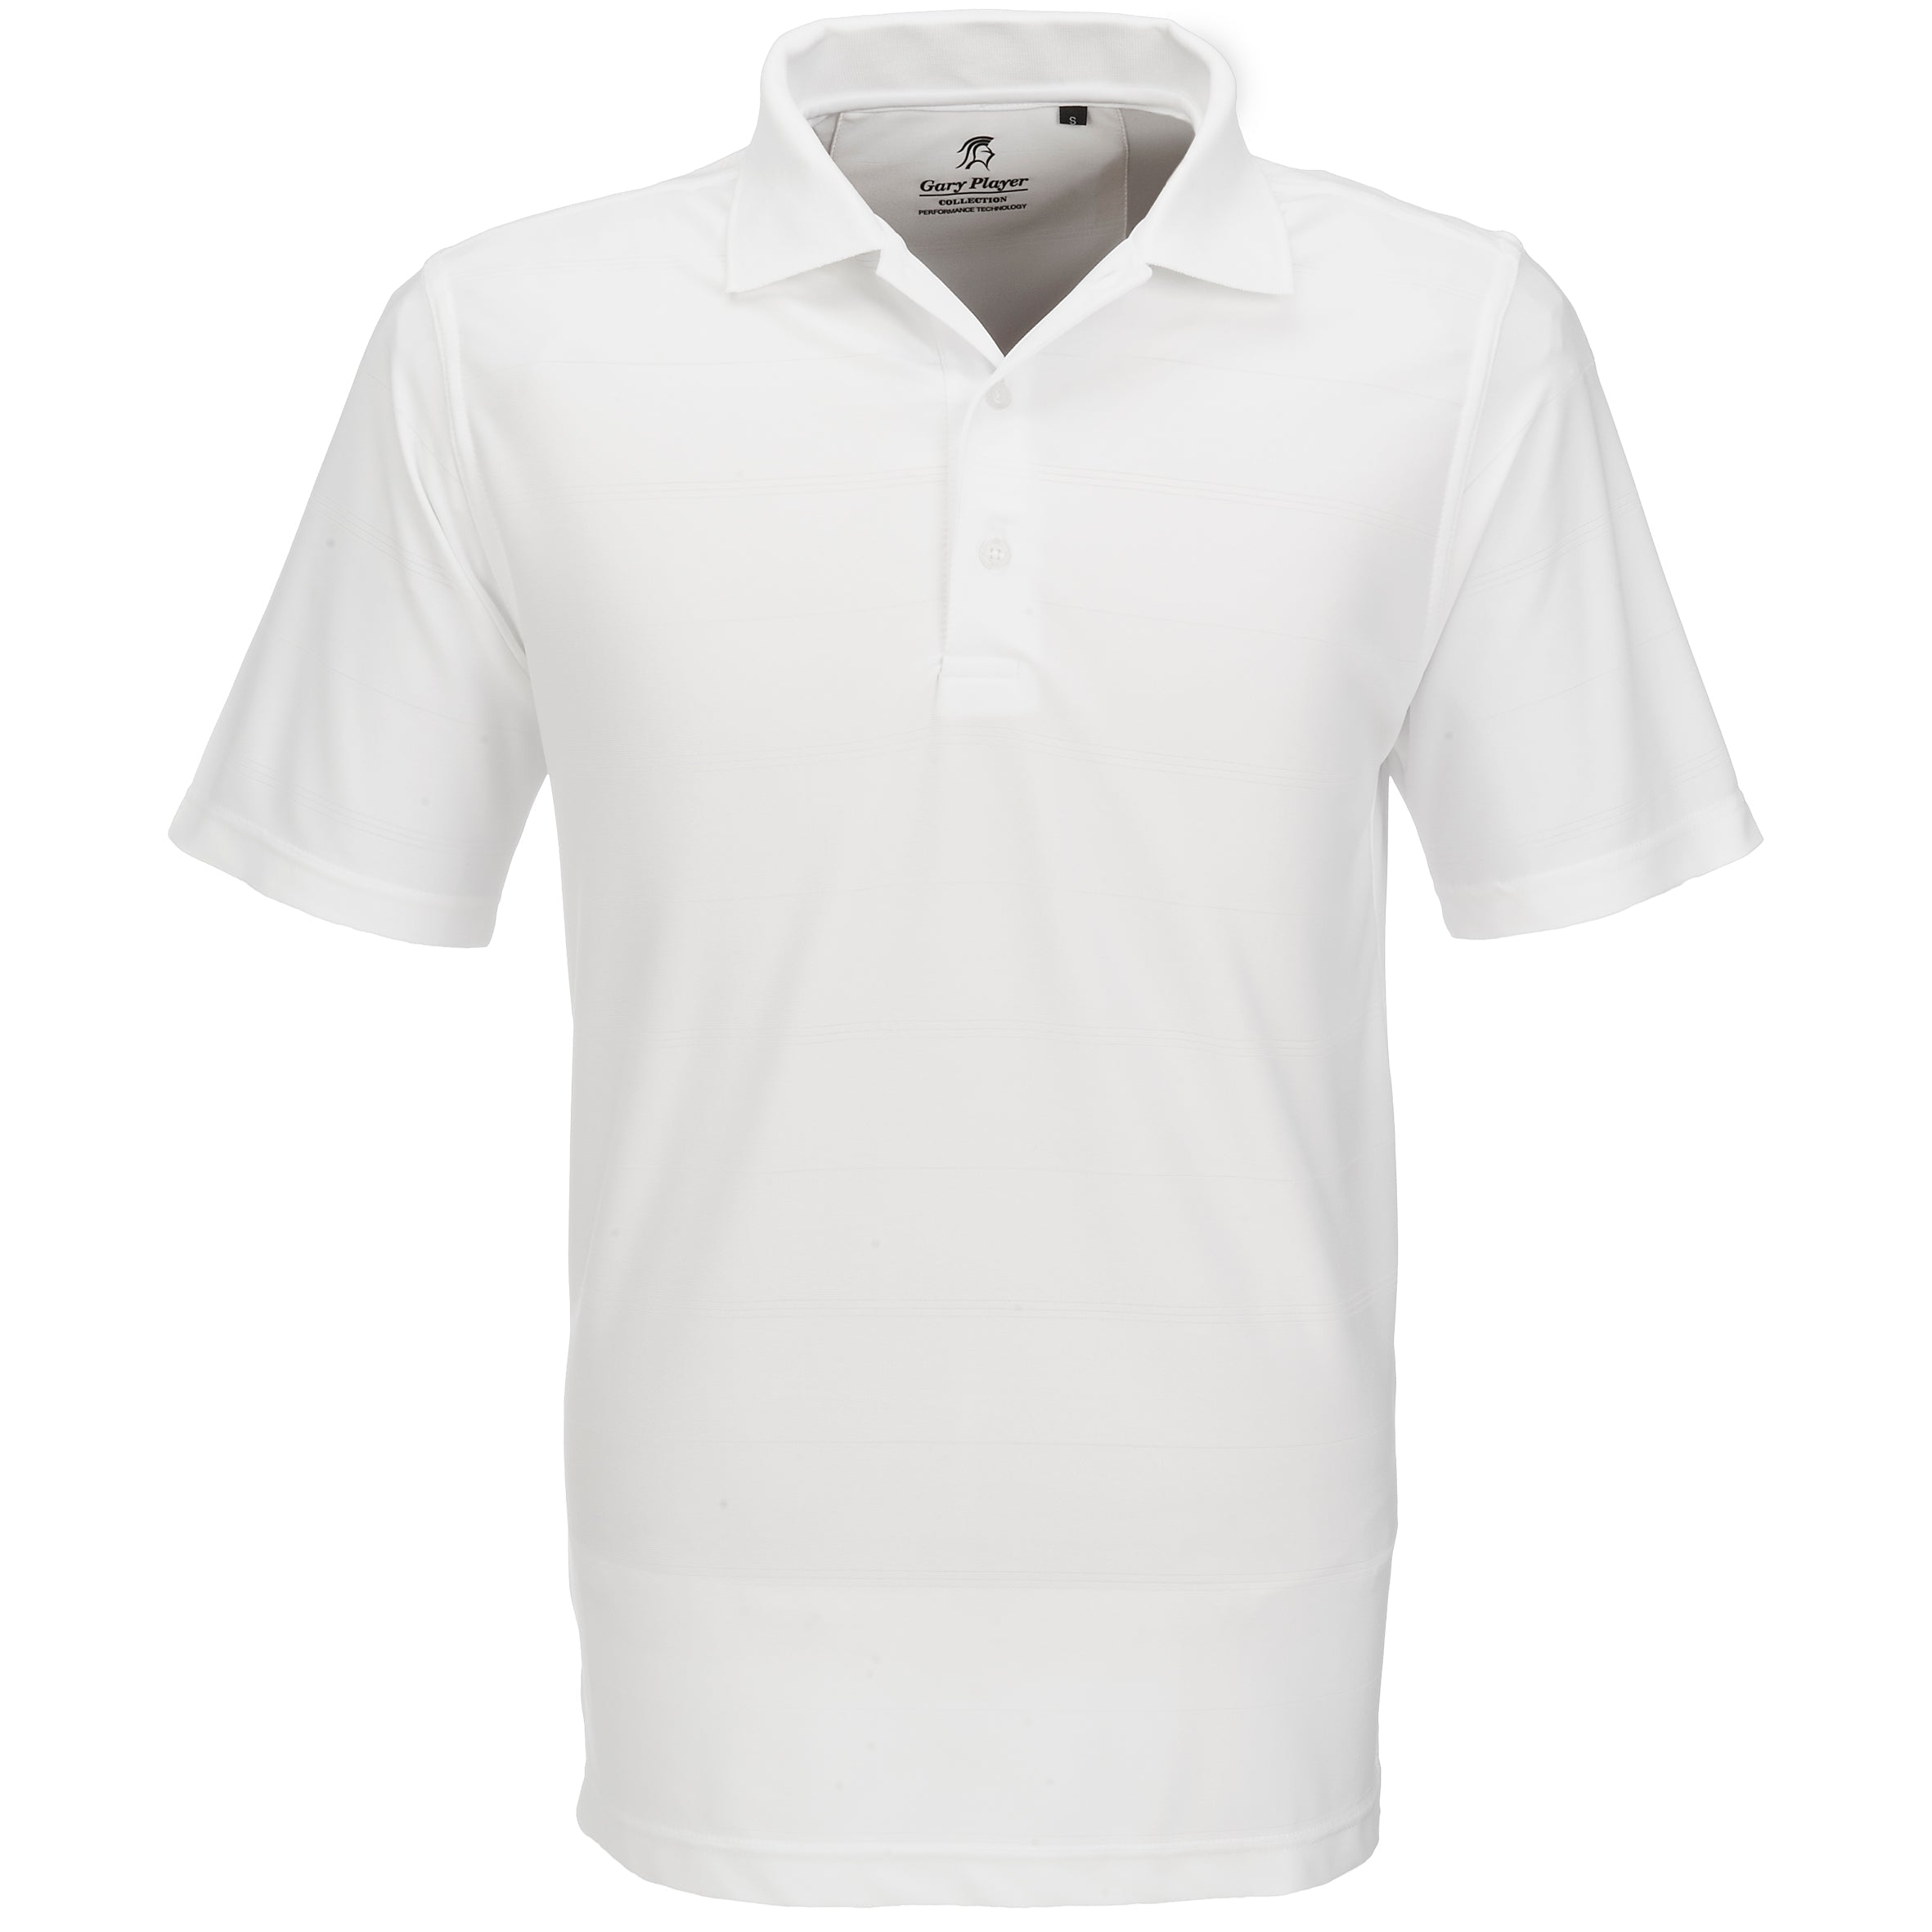 Mens Admiral Golf Shirt - Royal Blue Only-2XL-White-W